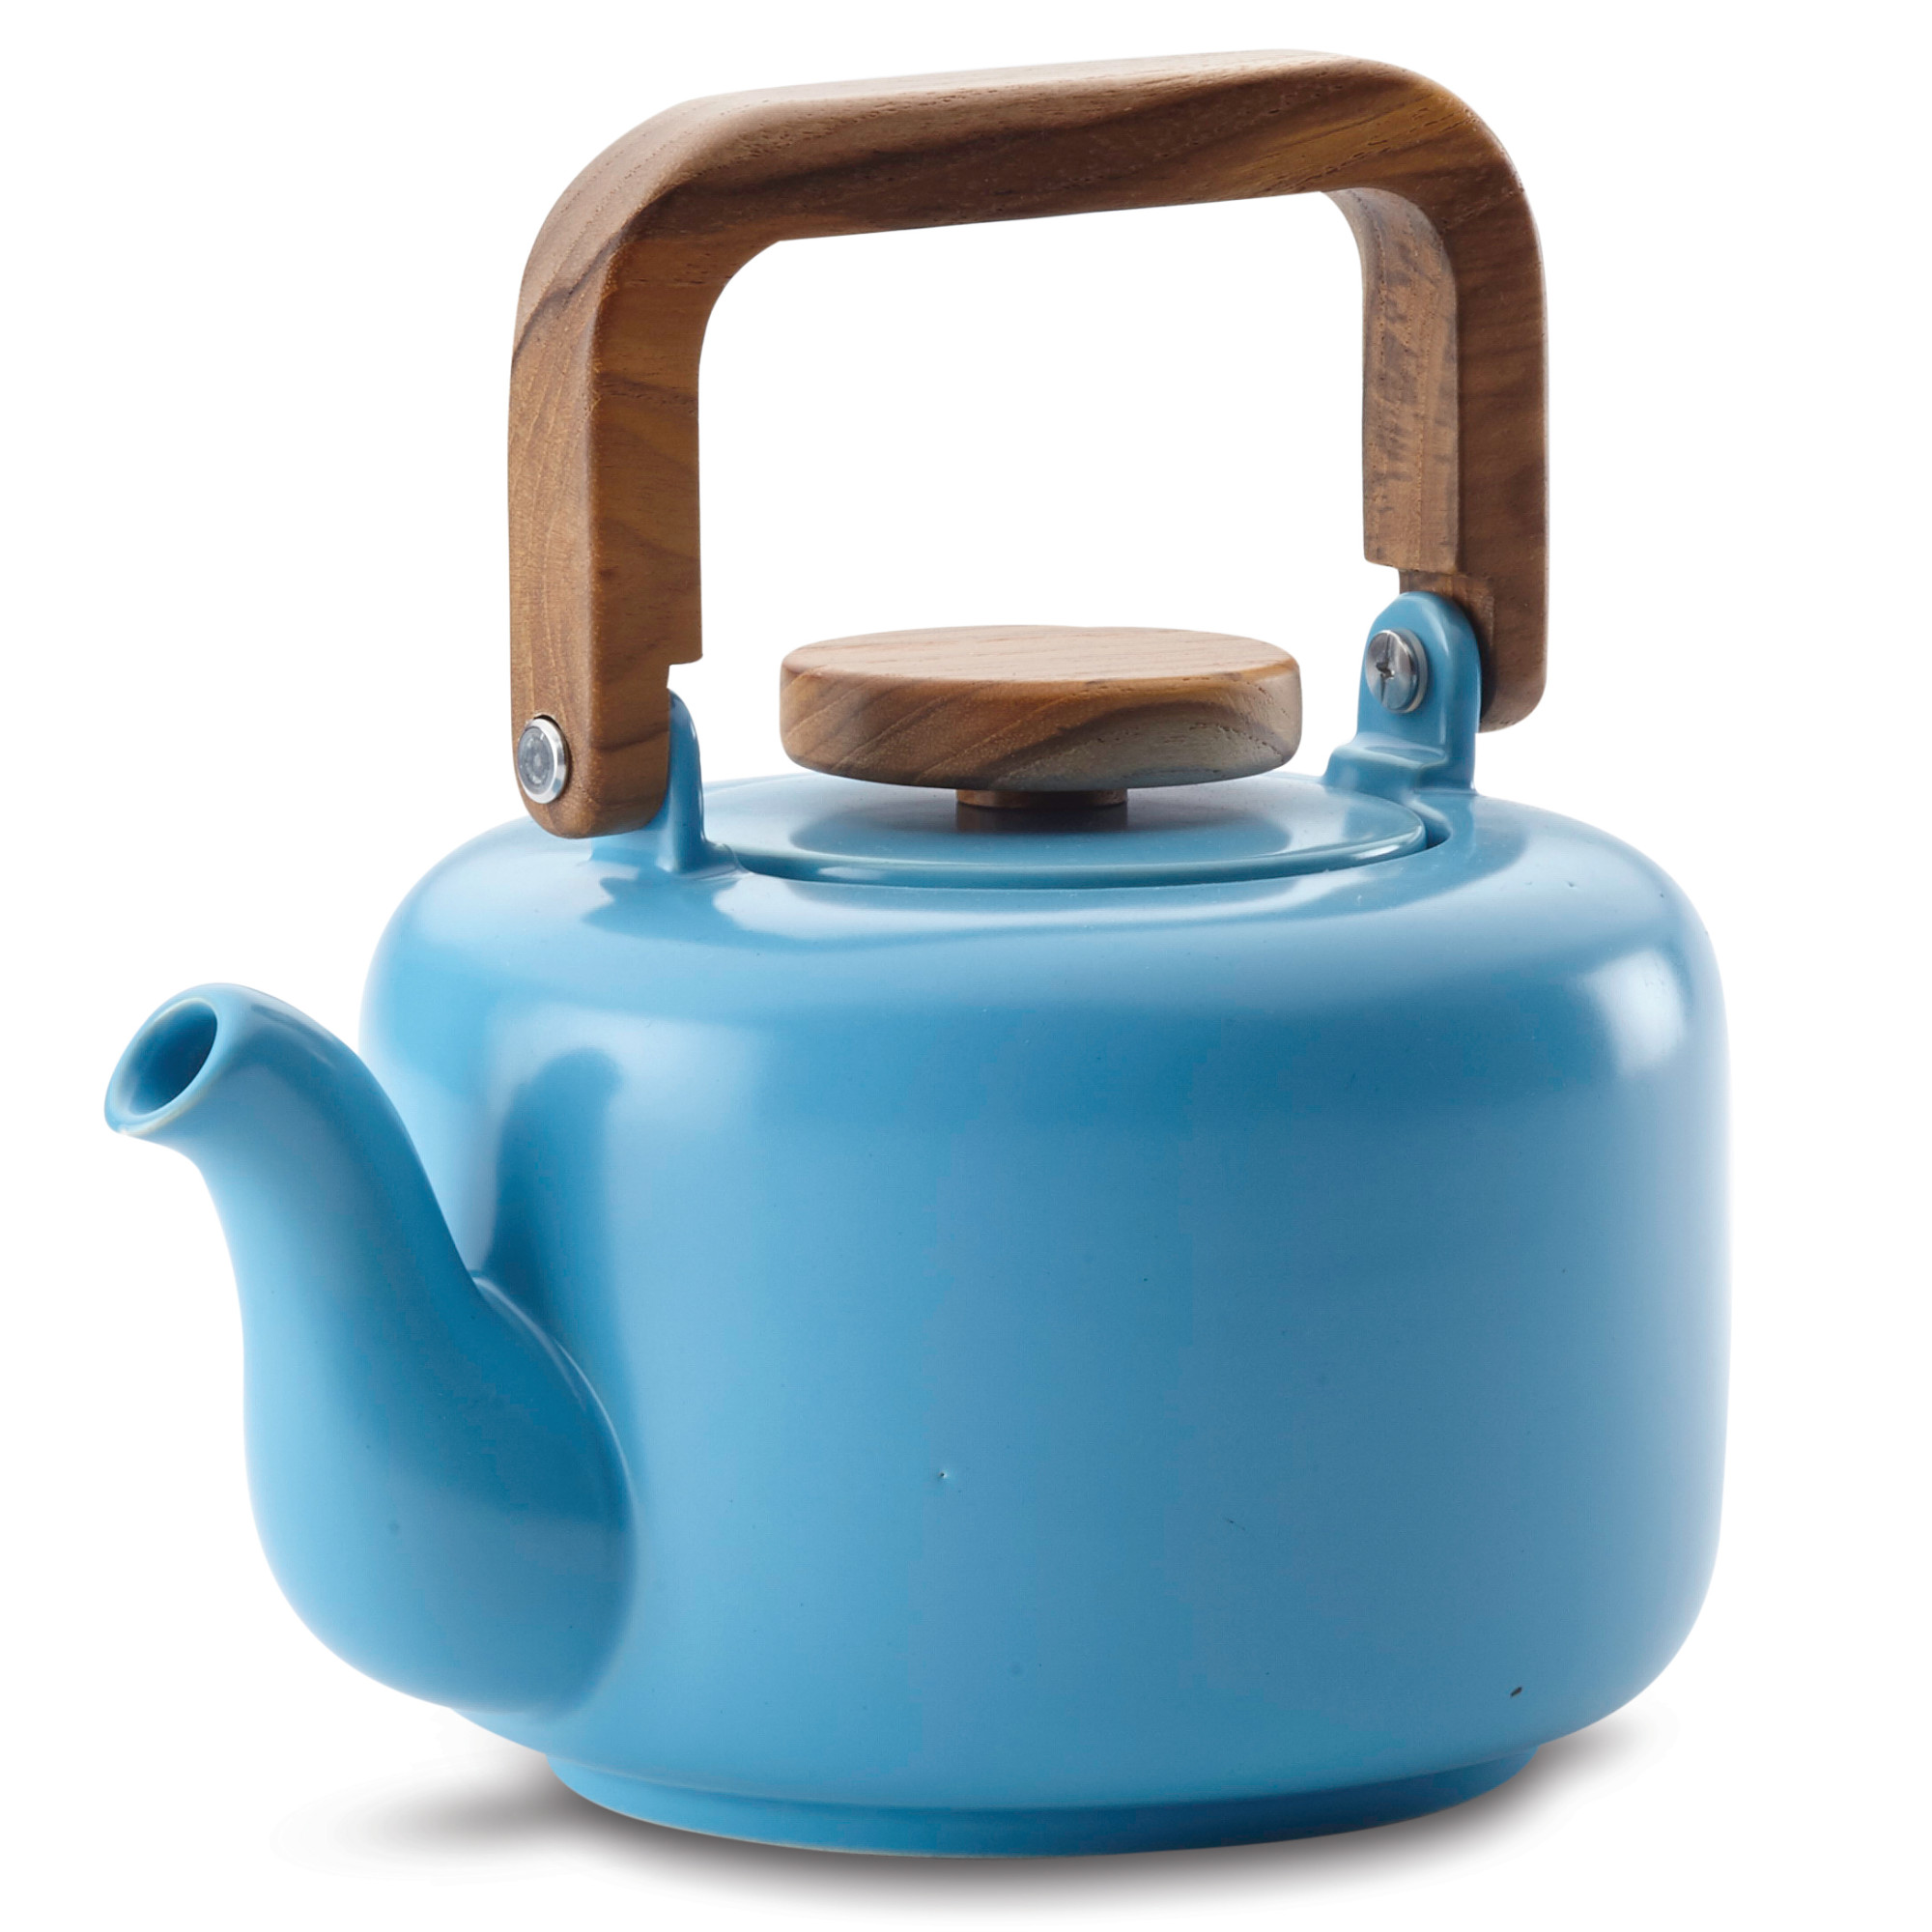 BonJour Ceramic Coffee and Tea 4-Cup Ceramic Teapot with Infuser, Aqua - image 1 of 7